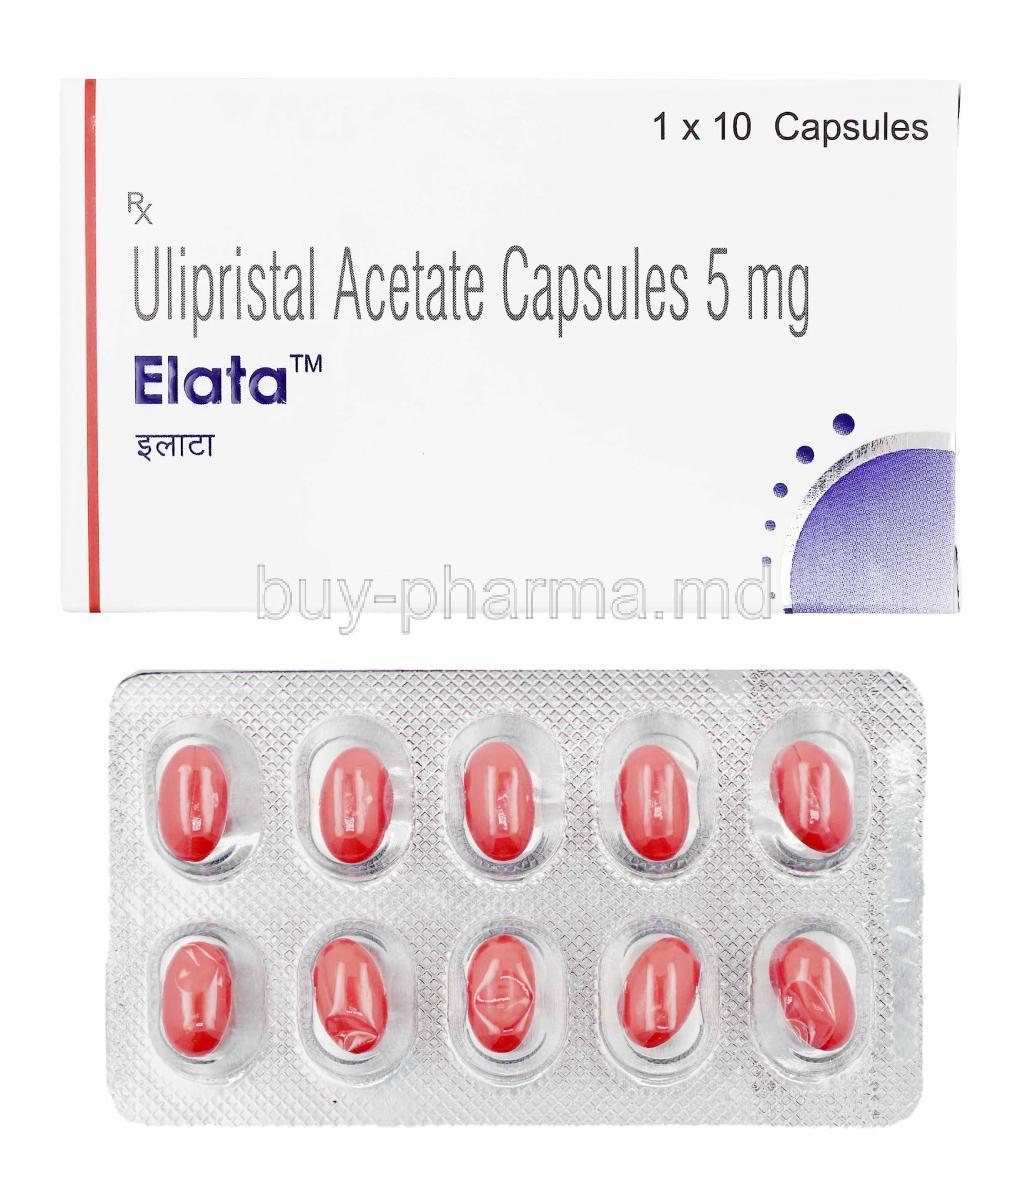 Elata, Ulipristal acetate 5mg box and capsules